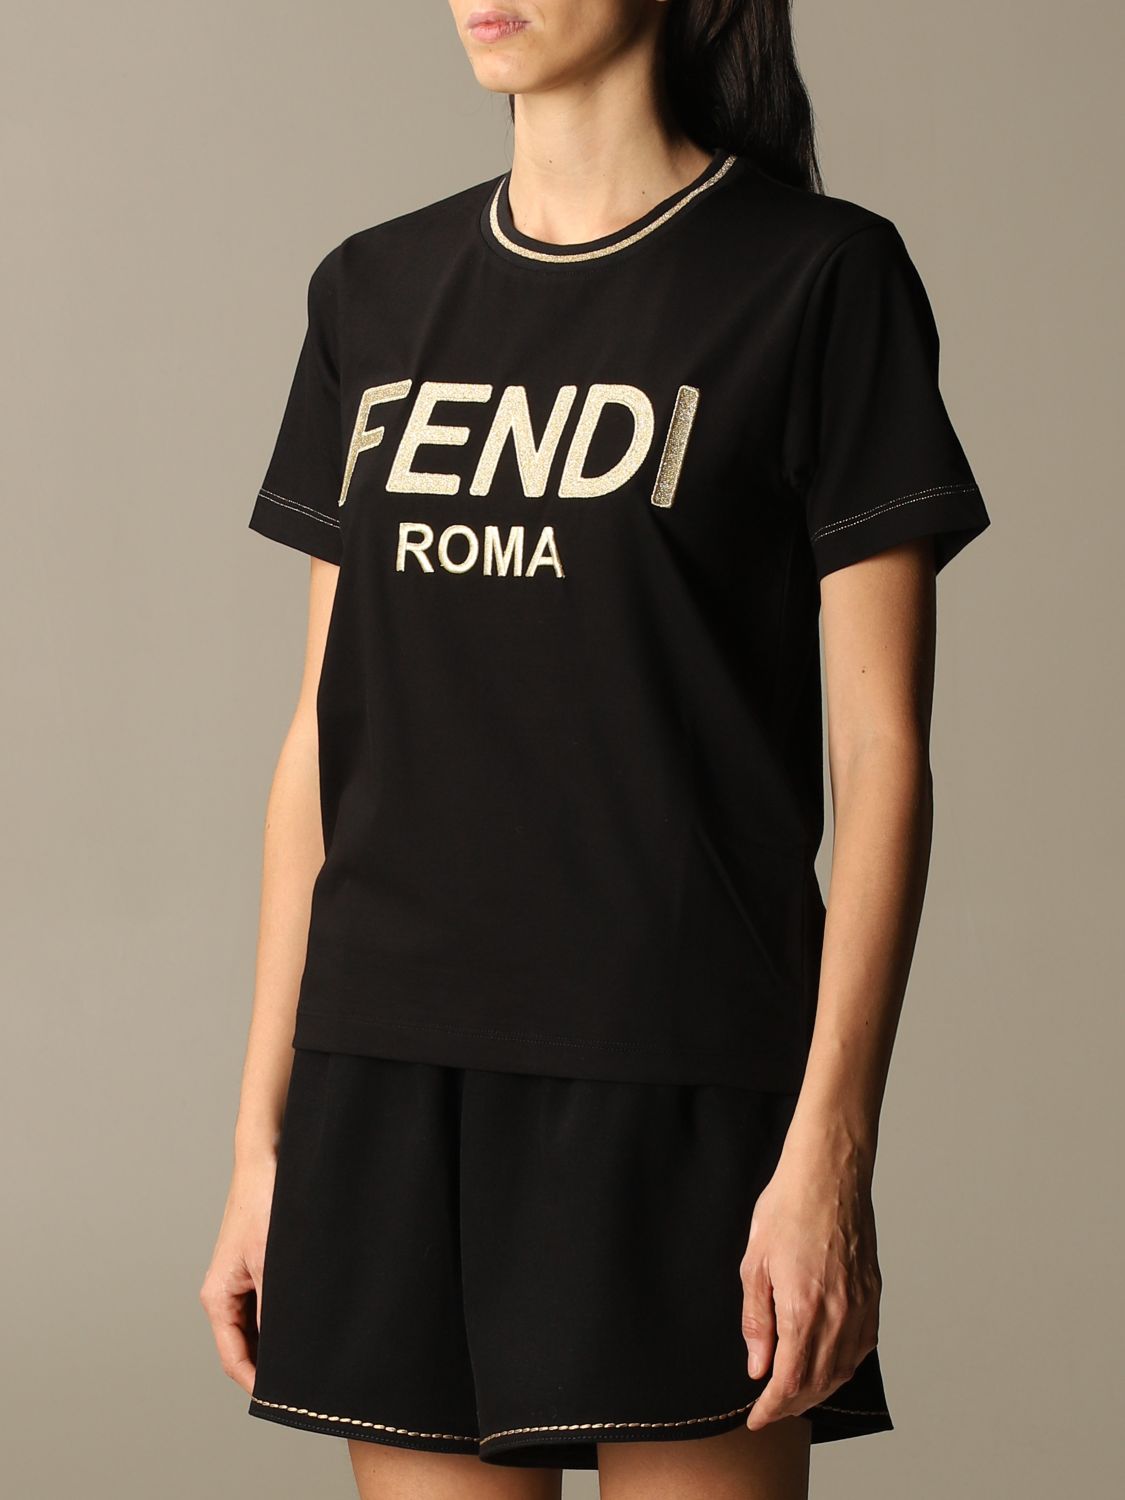 FENDI: T-shirt with Roma logo - Black | T-Shirt Fendi FS7254 AC6B ...